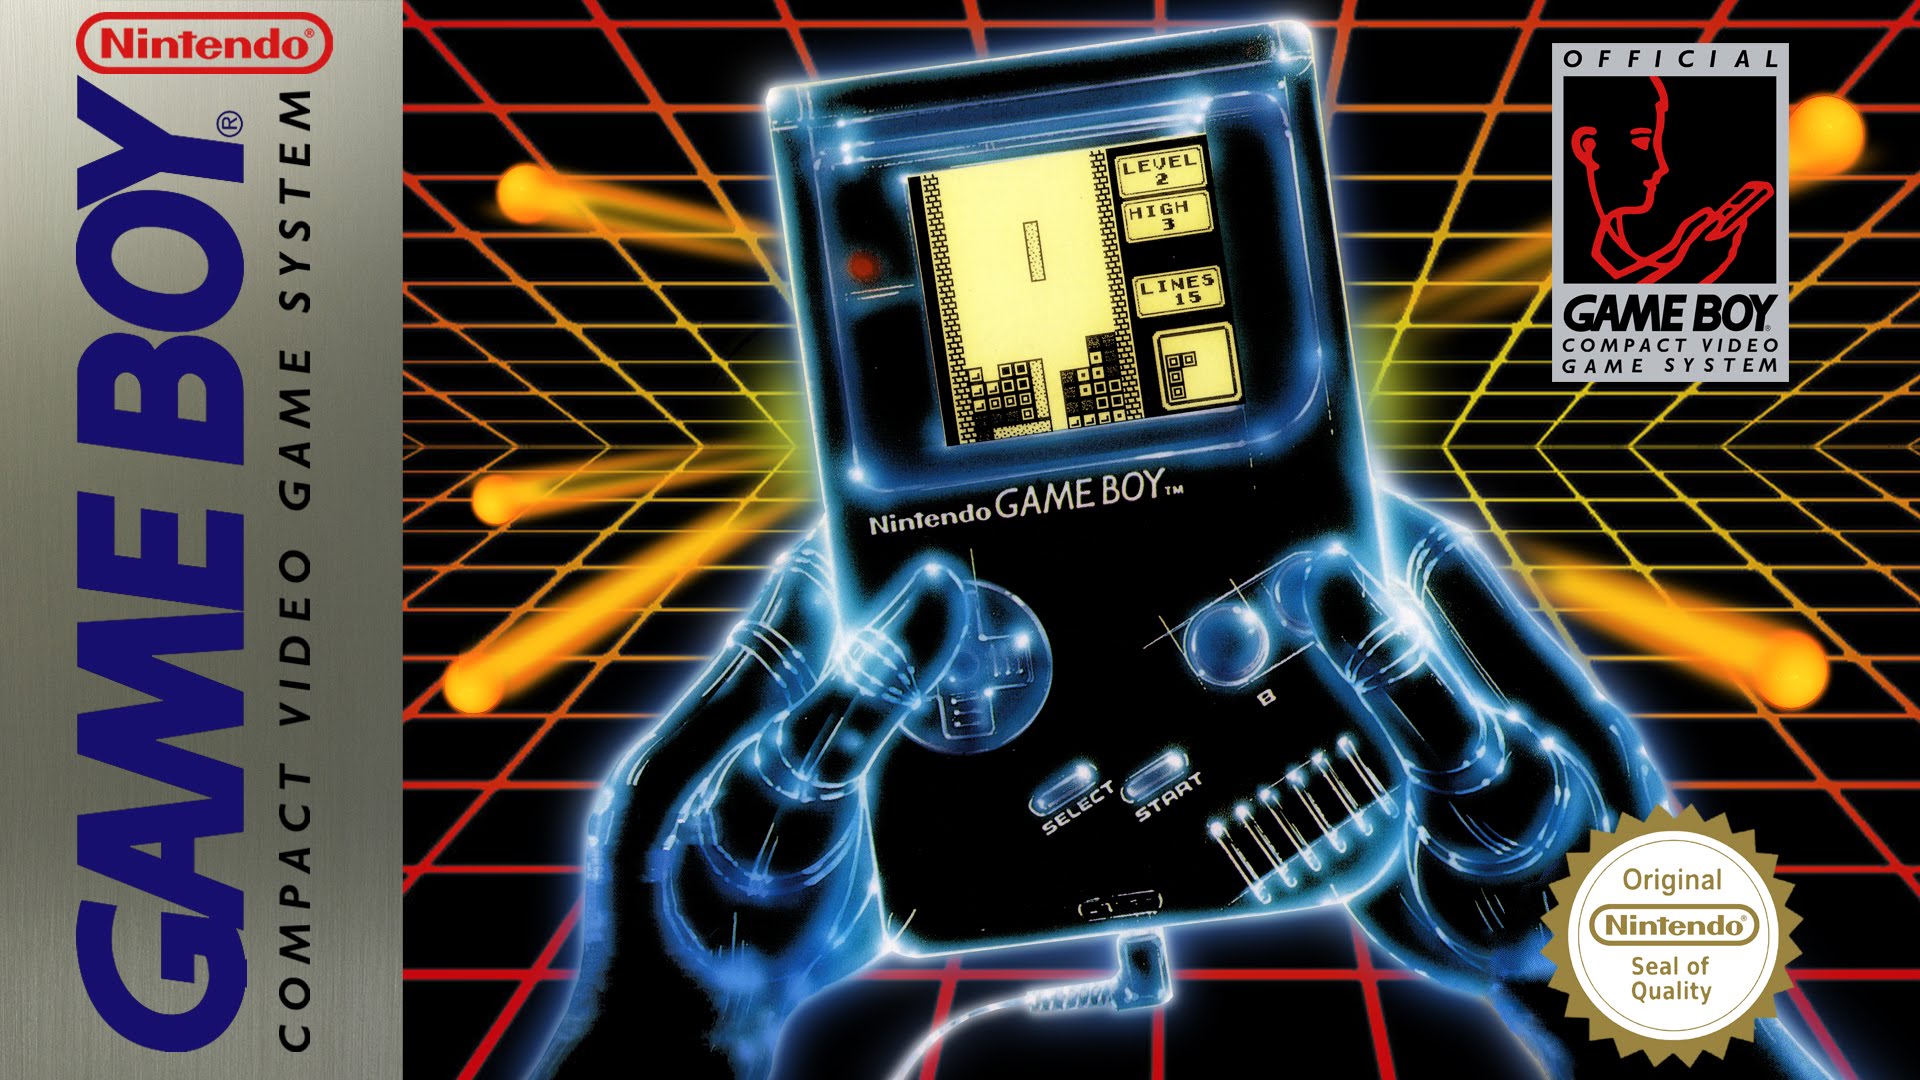 Game boy video games. Nintendo game boy. Геймбой обои. Game boy коробка. Game boy Original Box.